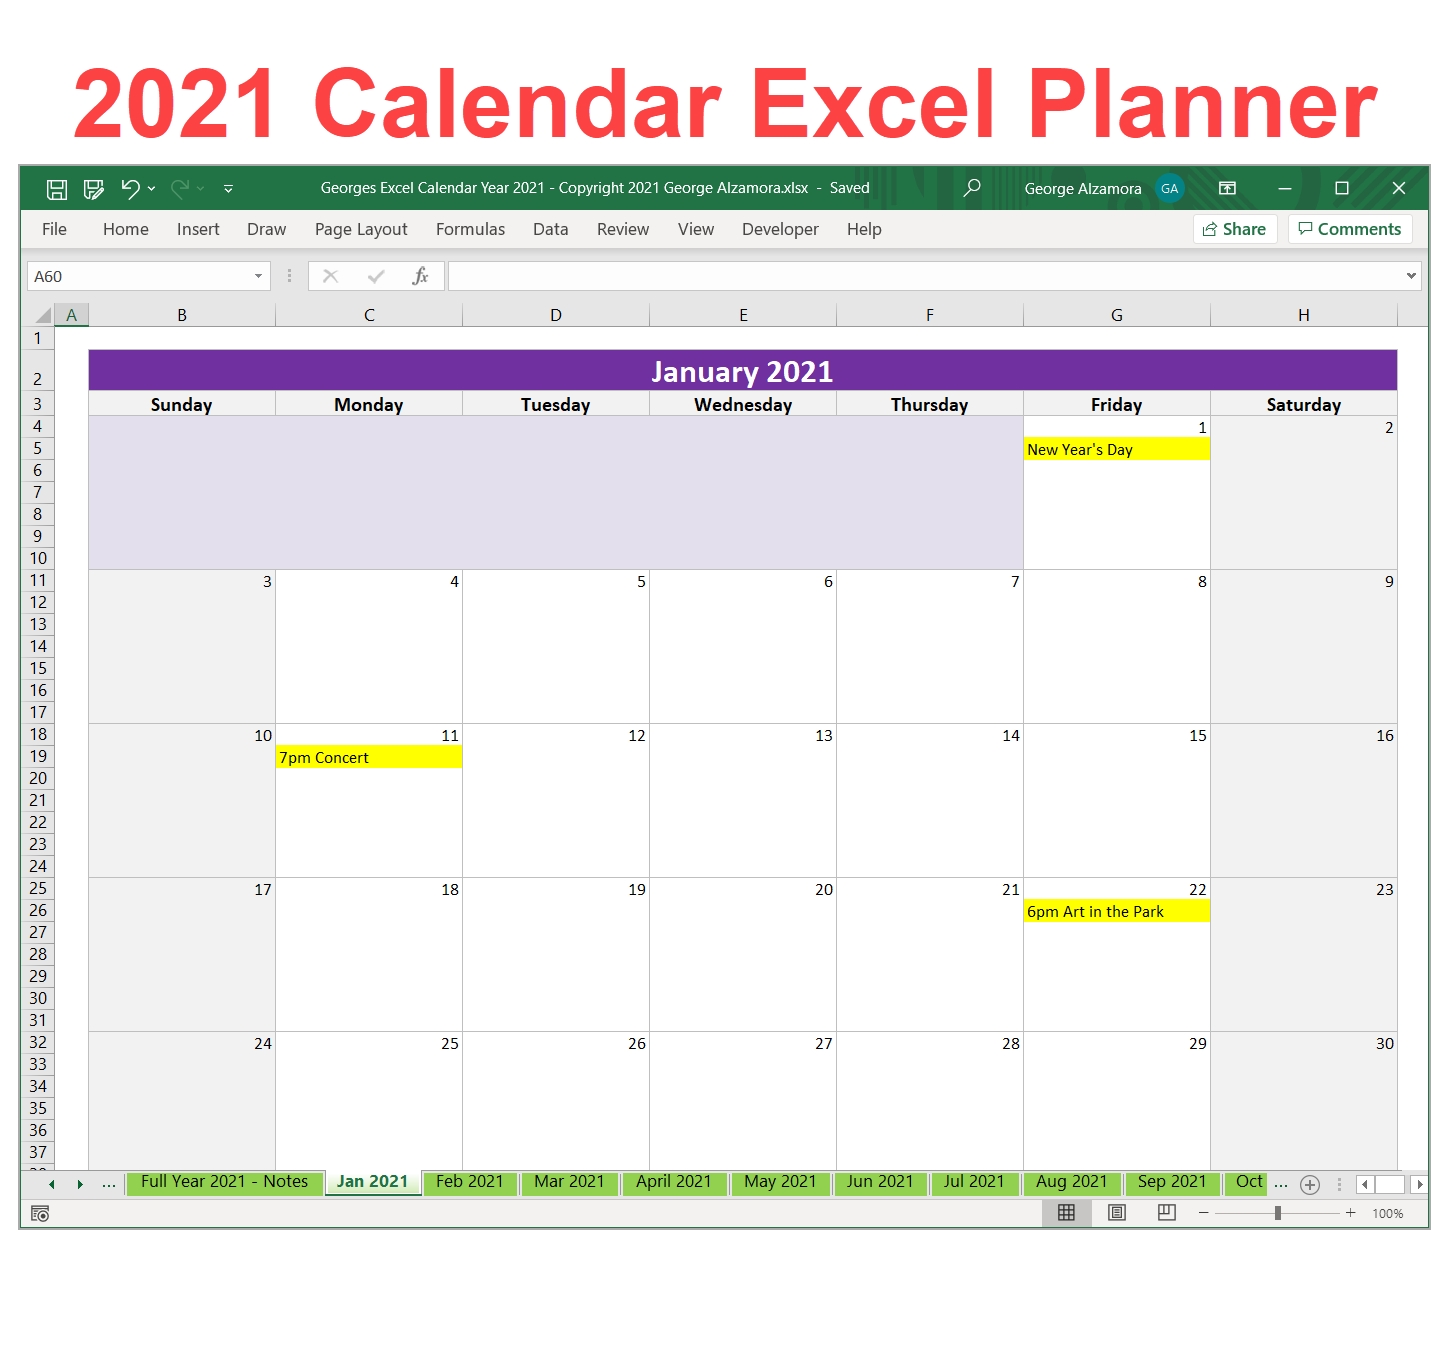 Georges Excel Calendar Year 2021 In 2020 | Excel Calendar-2021 Vacation Schedule Template Excel